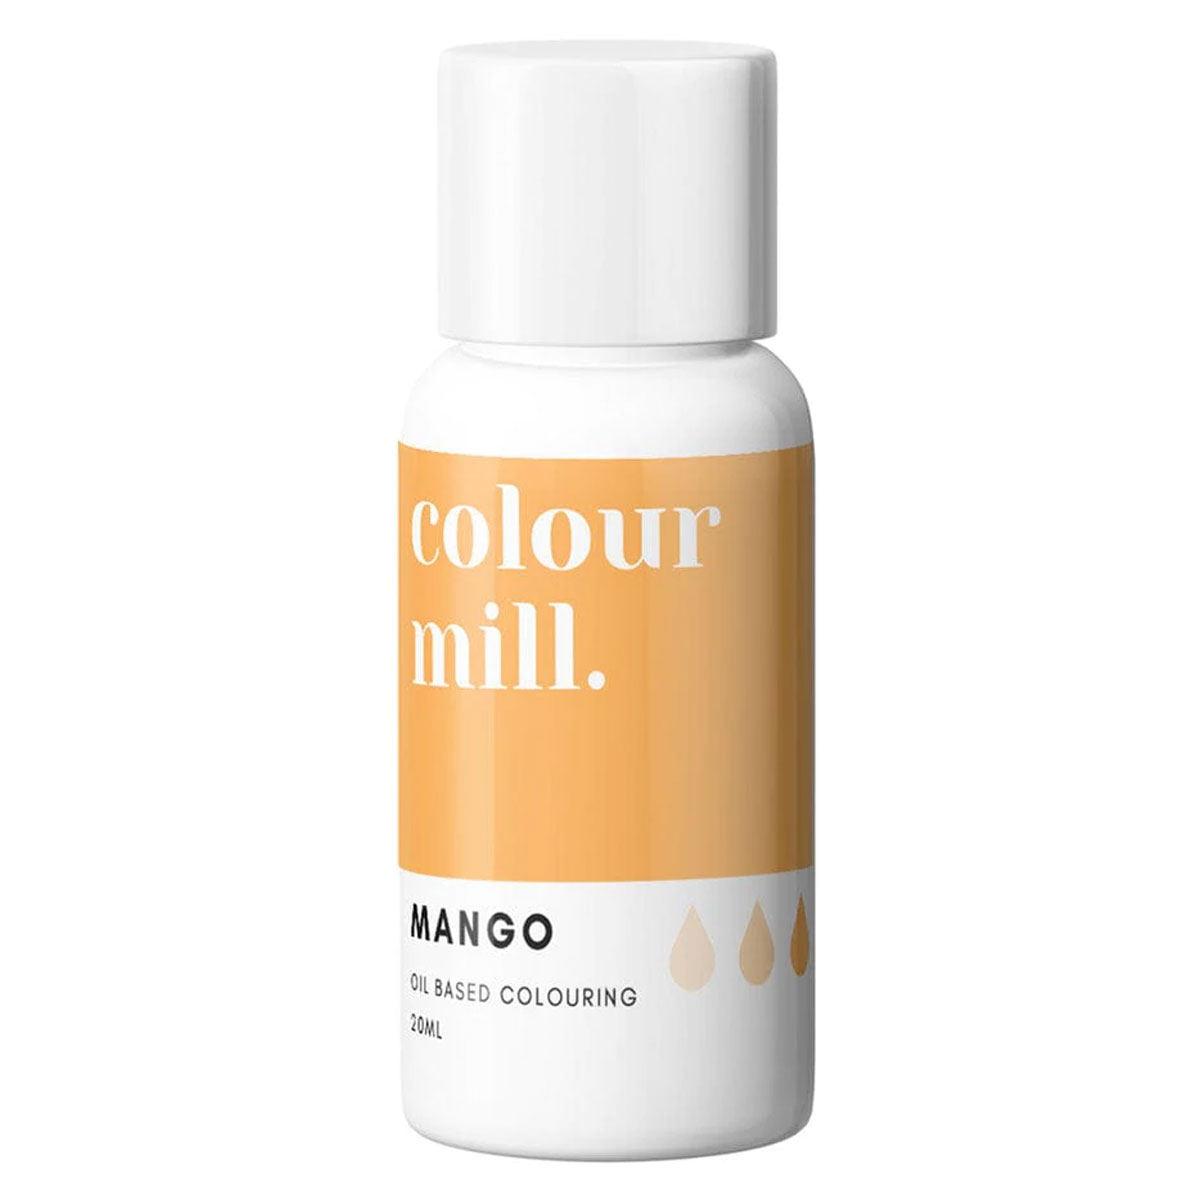 Colour Mill fettlösliche Lebensmittelfarbe - Mango 20ml